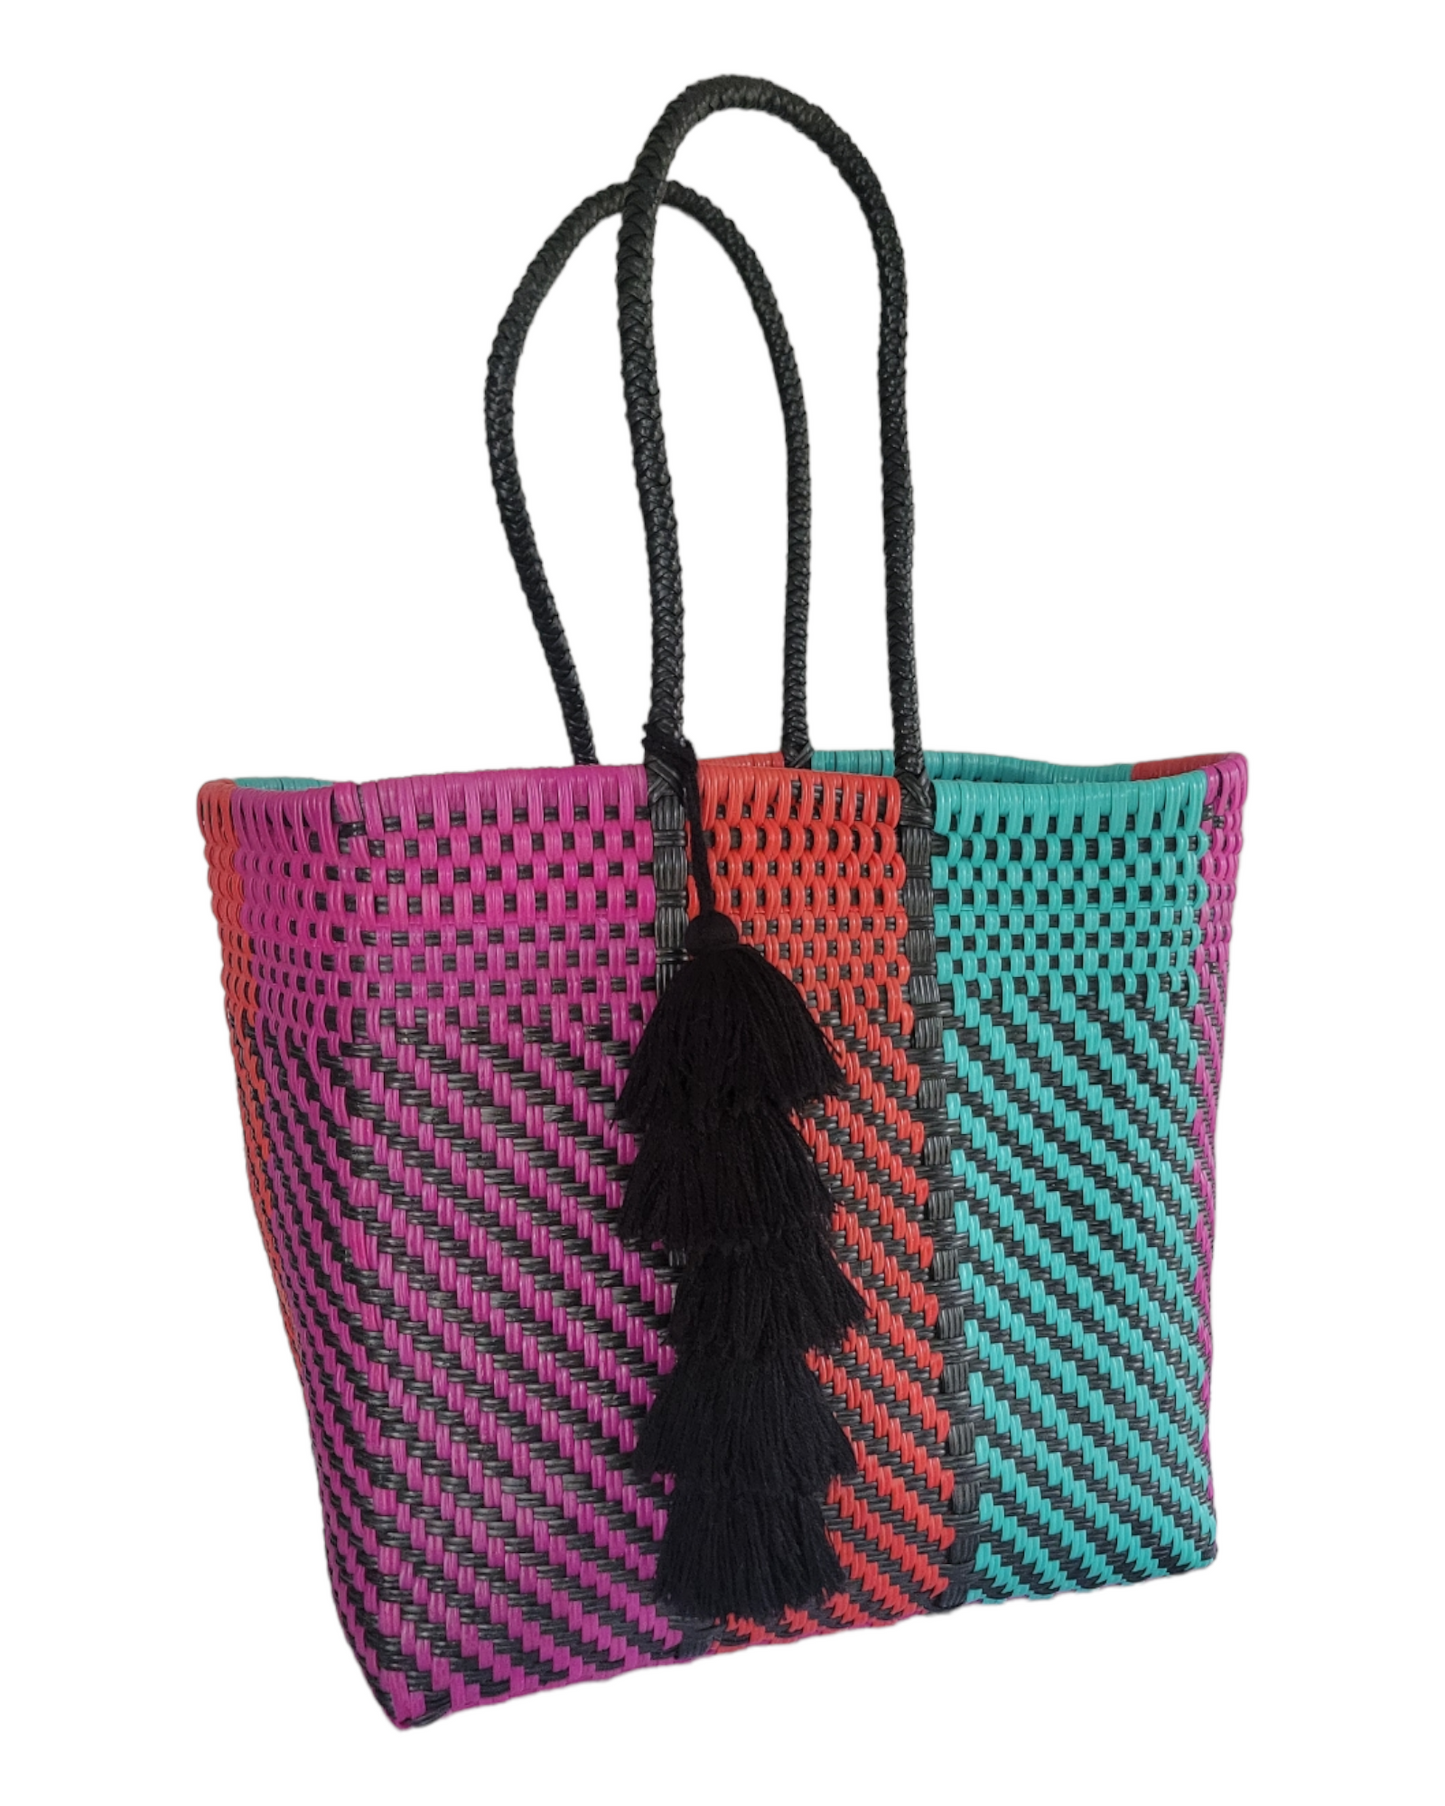 Be Praia | Fushia, Mint, Black & Red Medium Tote | Handwoven Recycled Bags